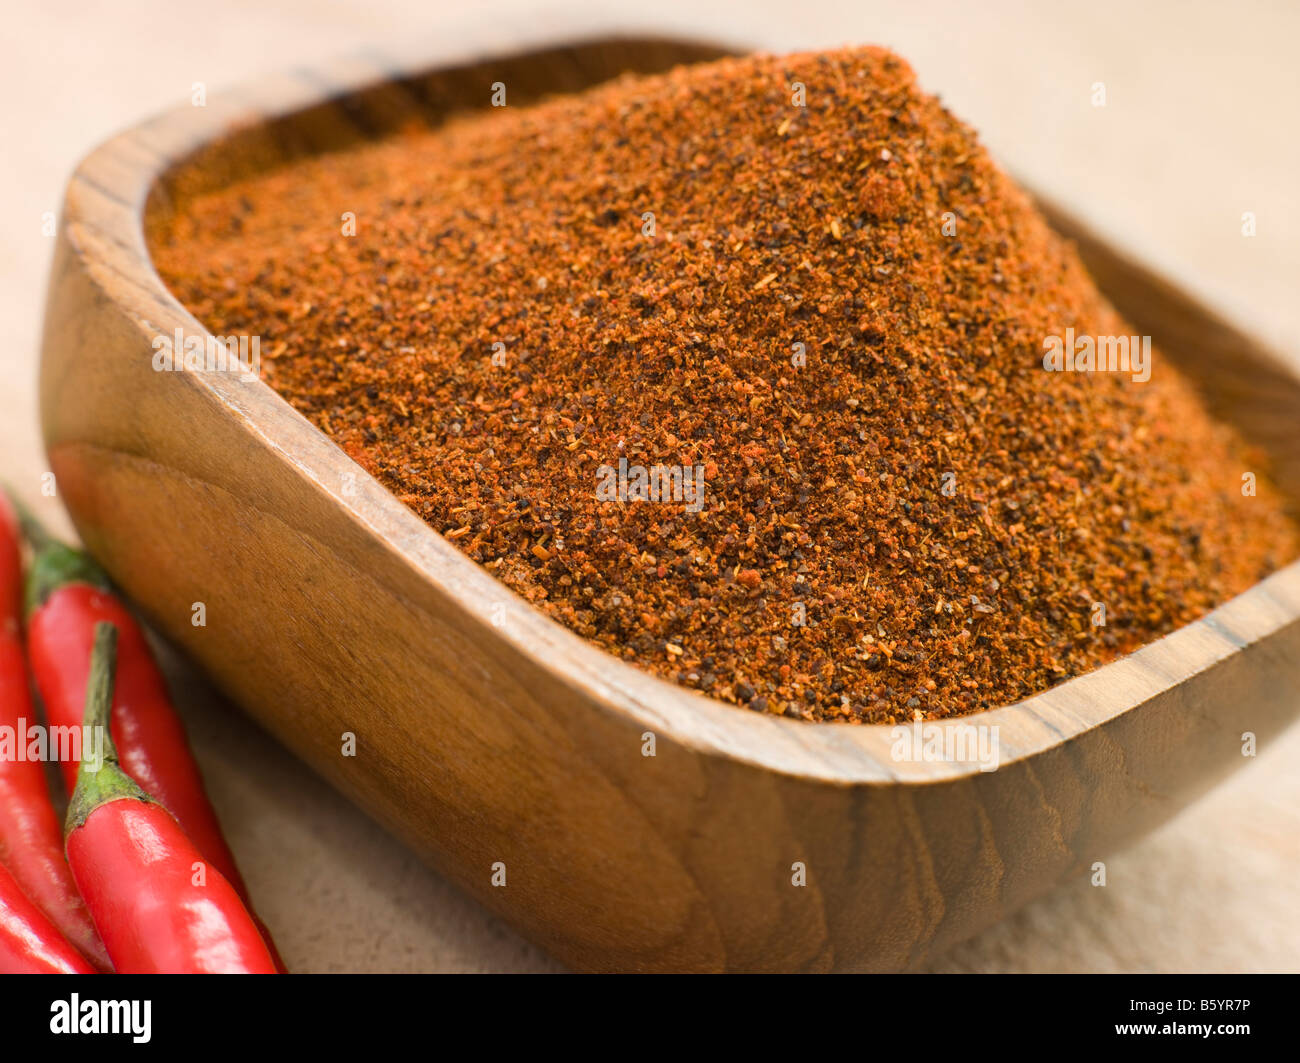 Dish of Hot Chili Powder with Fresh Chilies Stock Photo